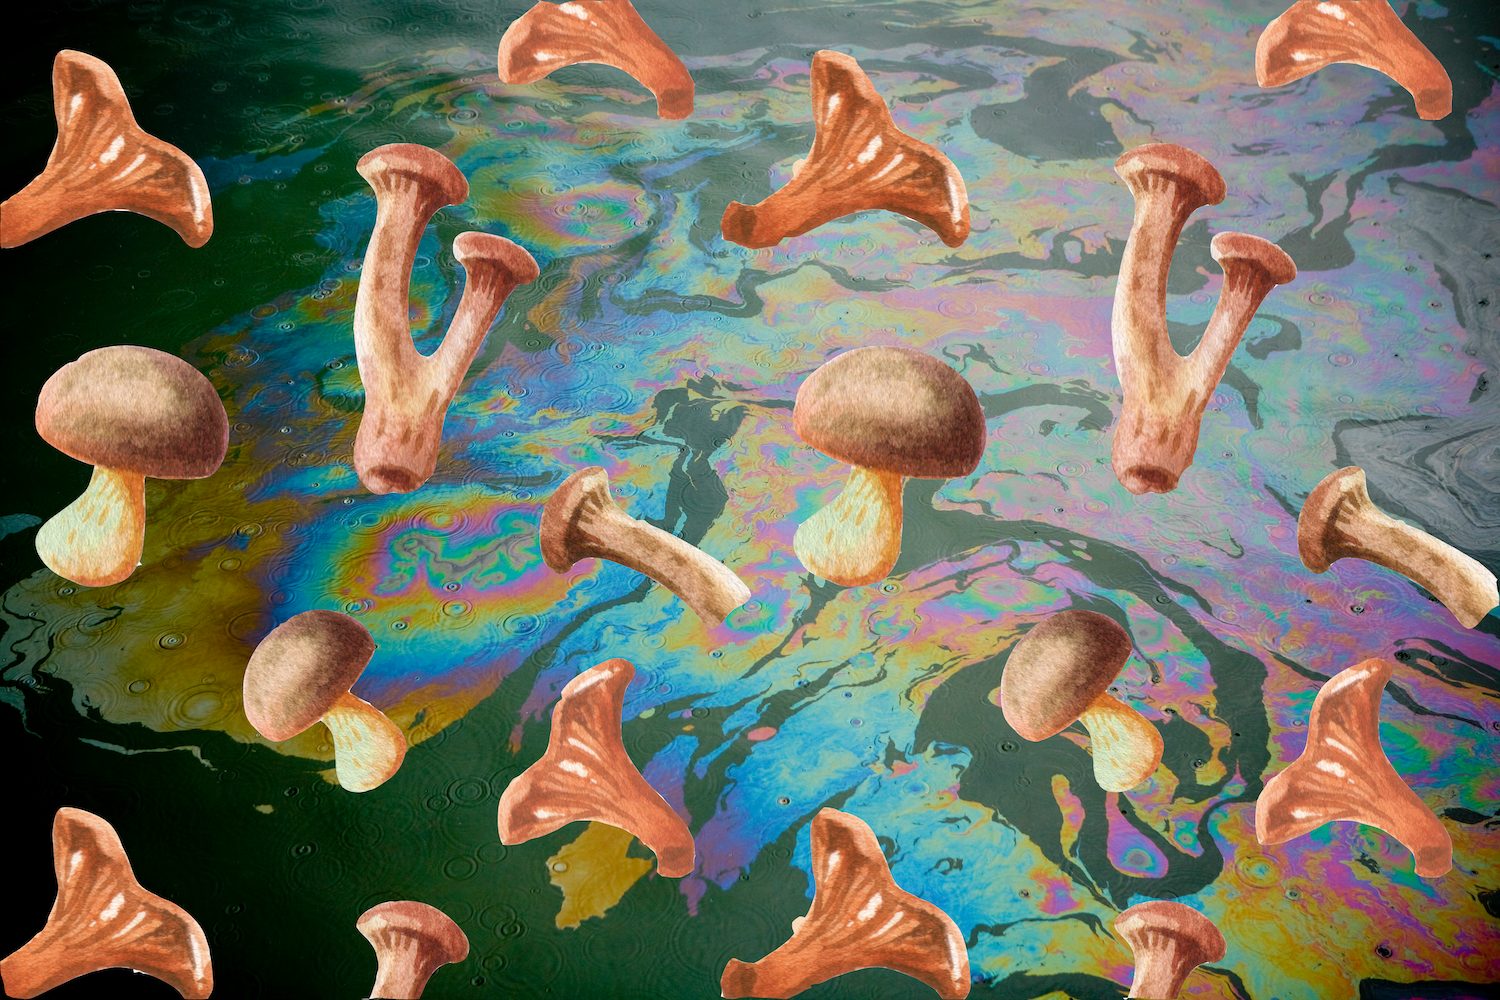 mycoremediation mushroom pollution natural disaster clean up february 2019 1 | creativity